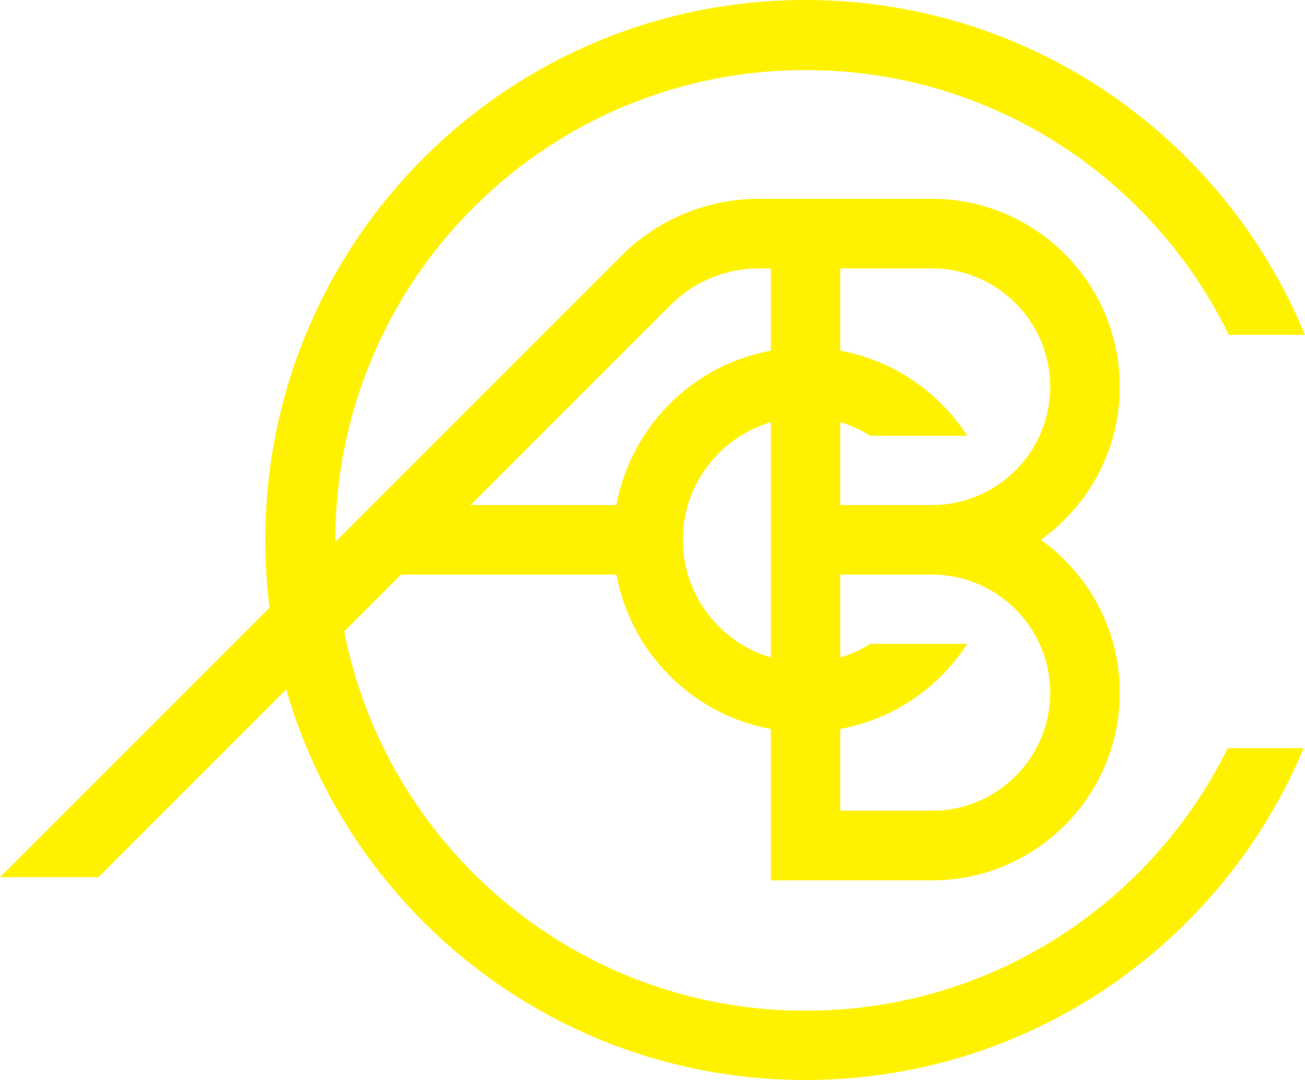 ARVAL-logo